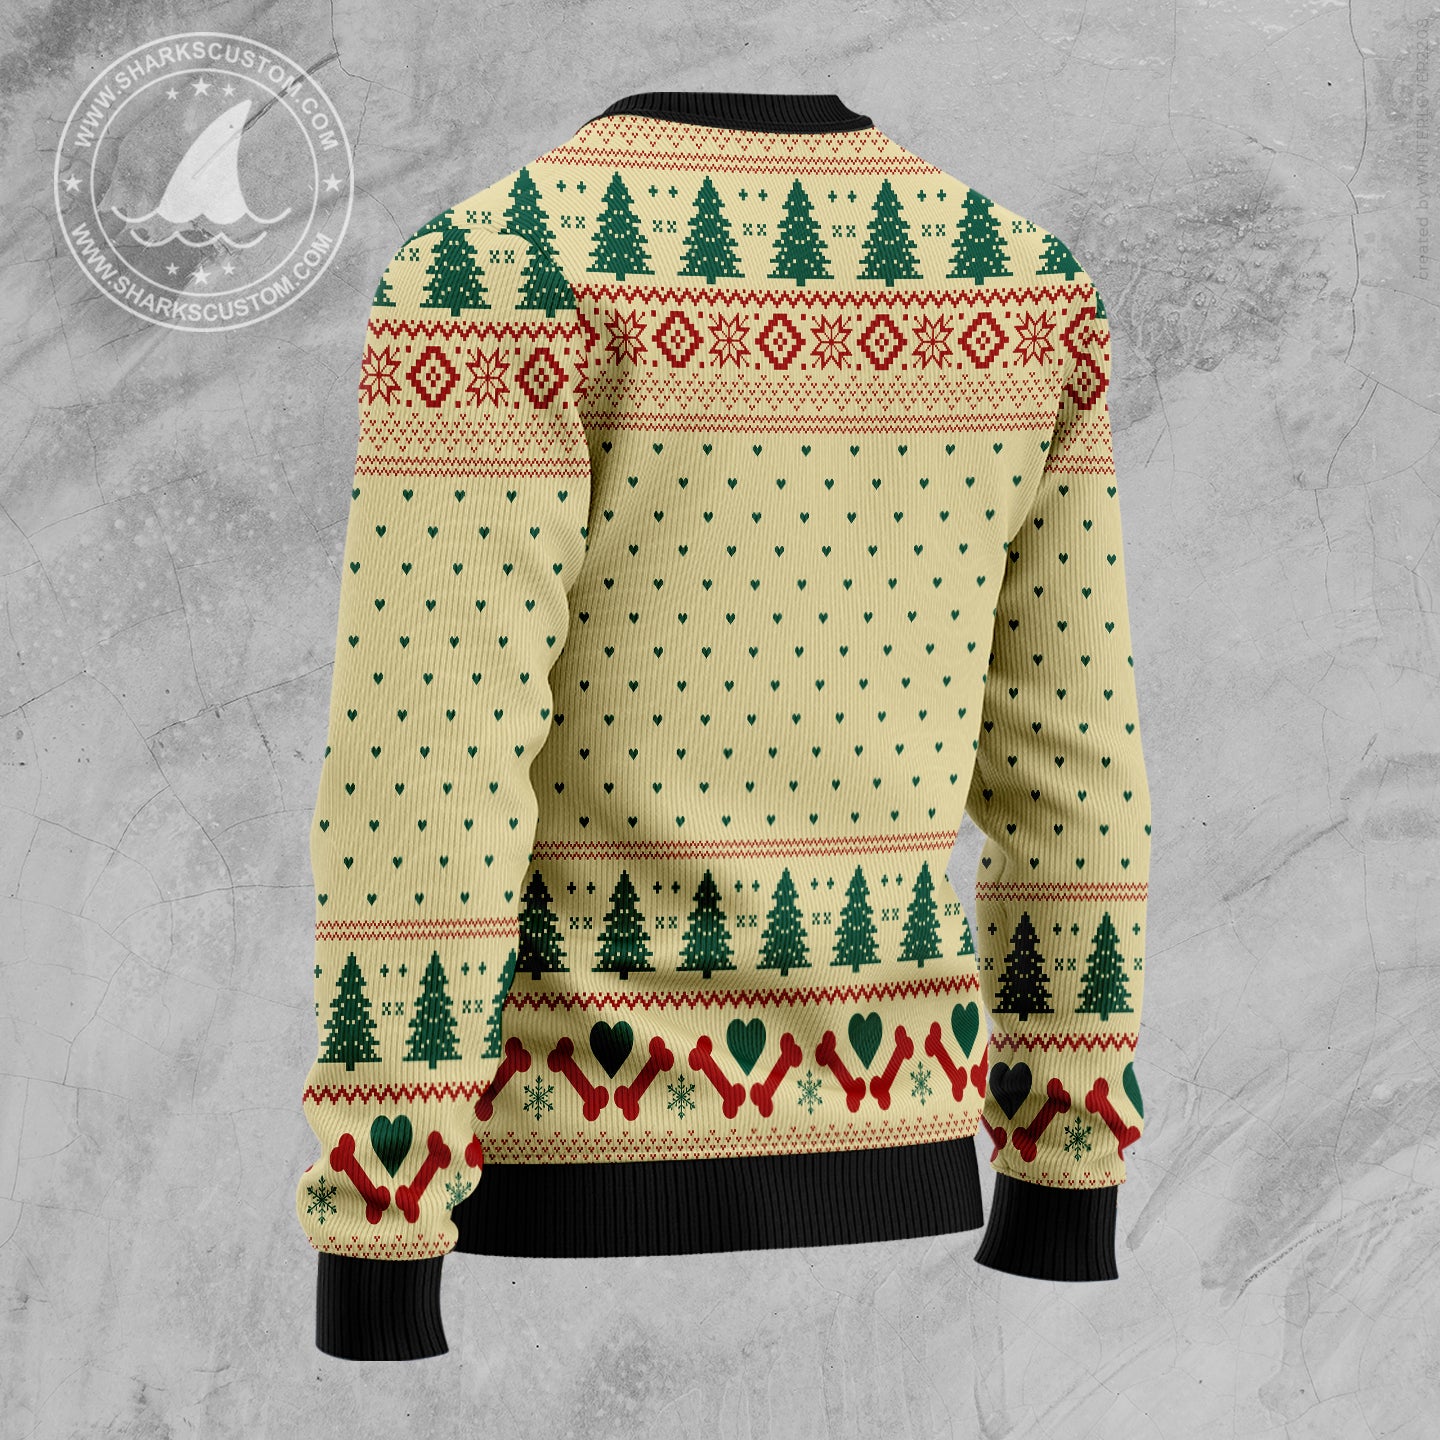 Anatolian Shepherd Mom D2610 Ugly Christmas Sweater